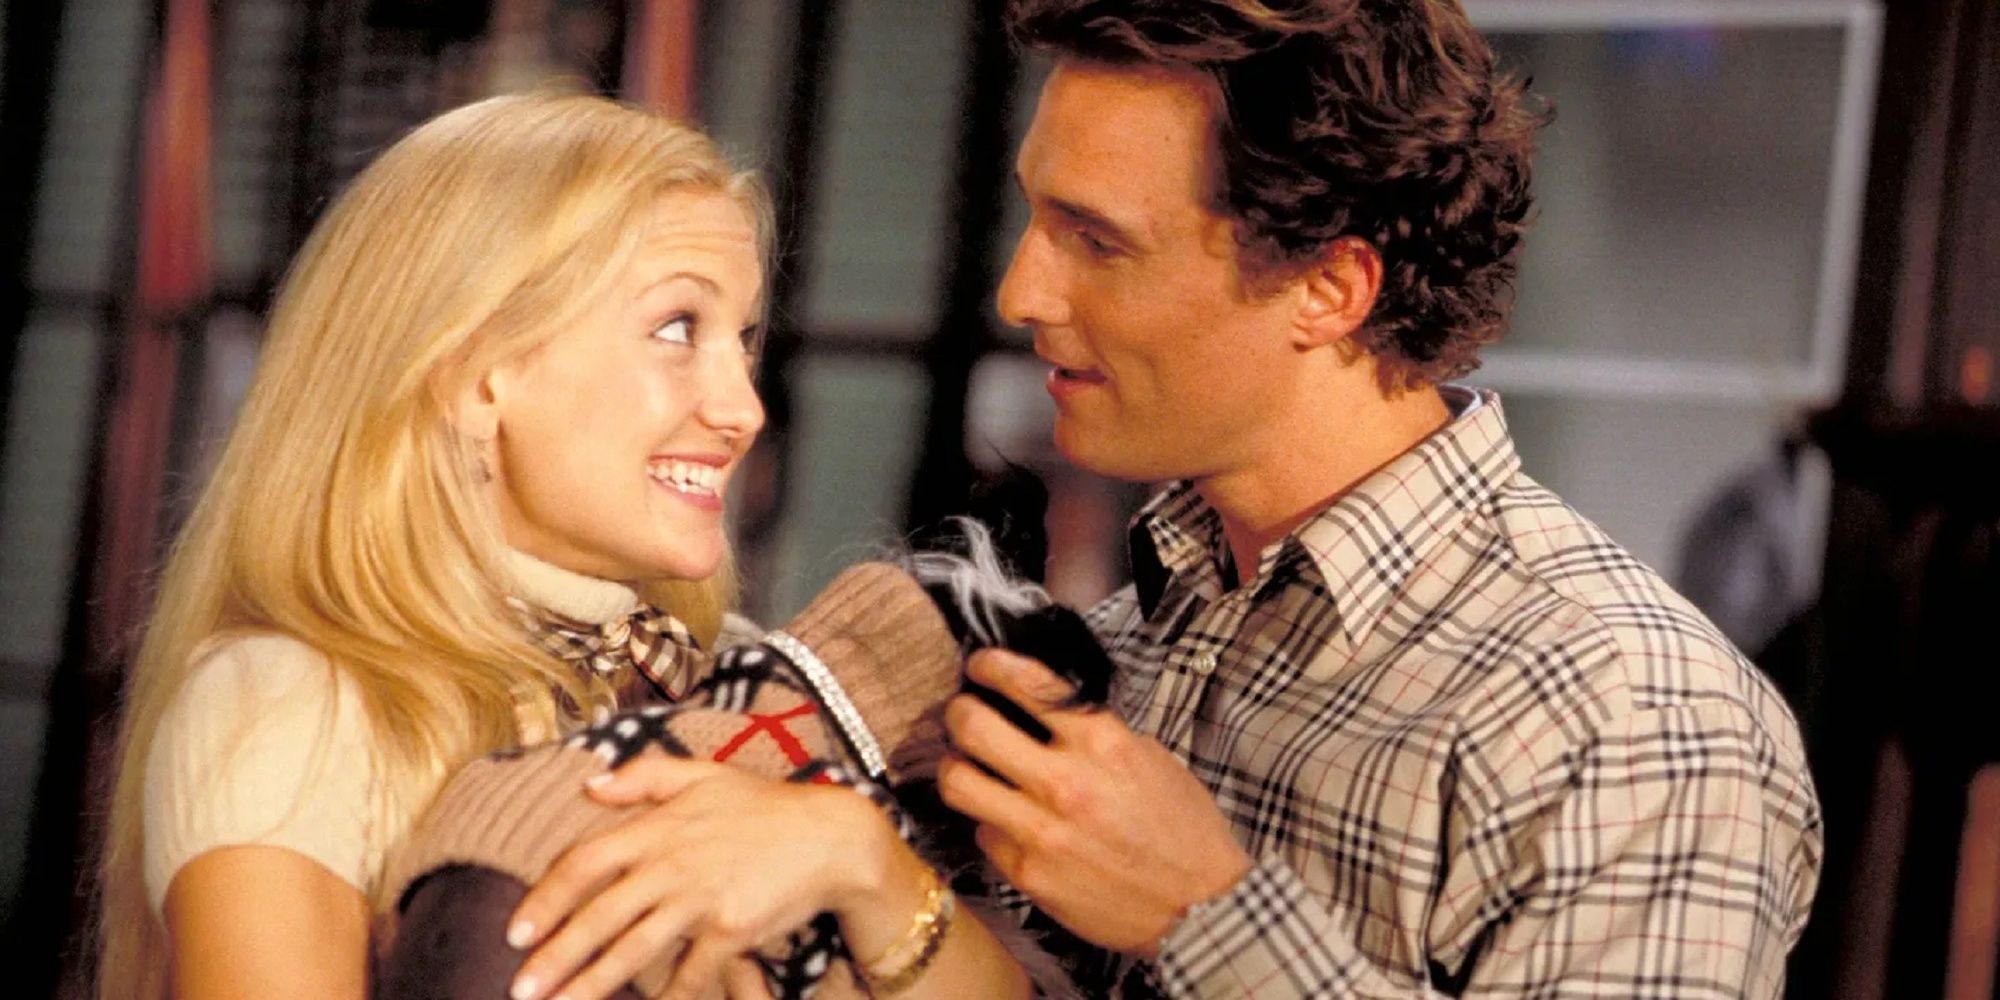 Kate Hudson and Matthew McConaughey holding dog.